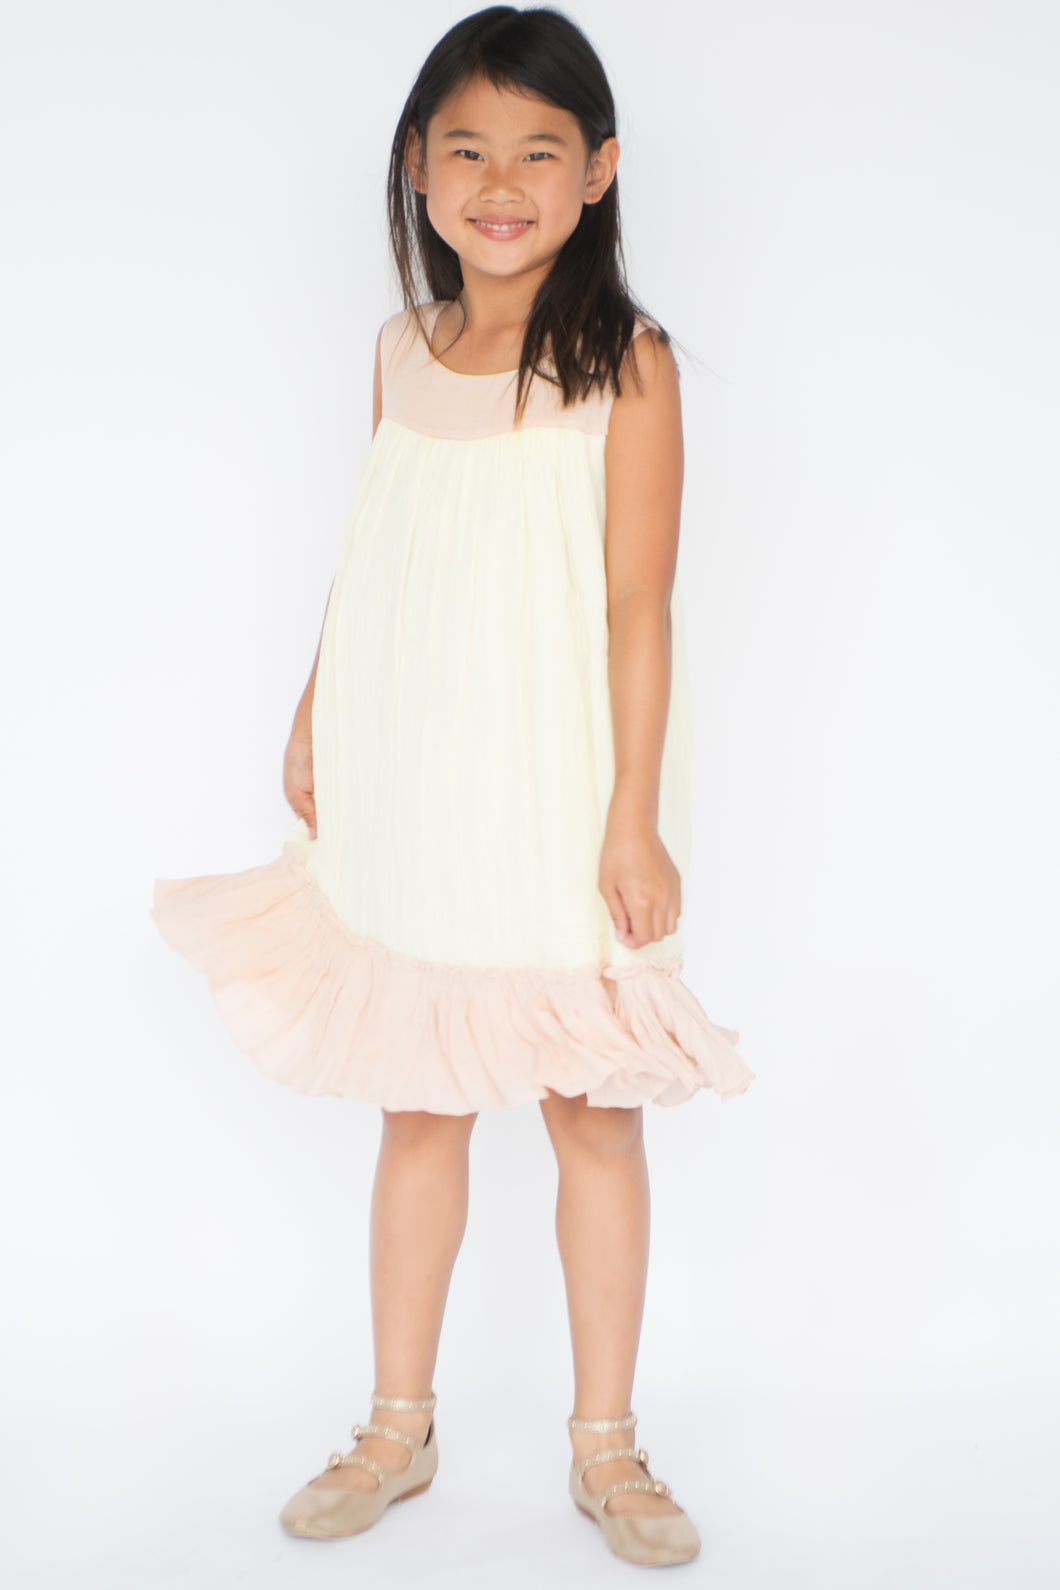 Pastel Yellow & Blush Shift Dress - Kids Wholesale Boutique Clothing, Dress - Girls Dresses, Yo Baby Wholesale - Yo Baby